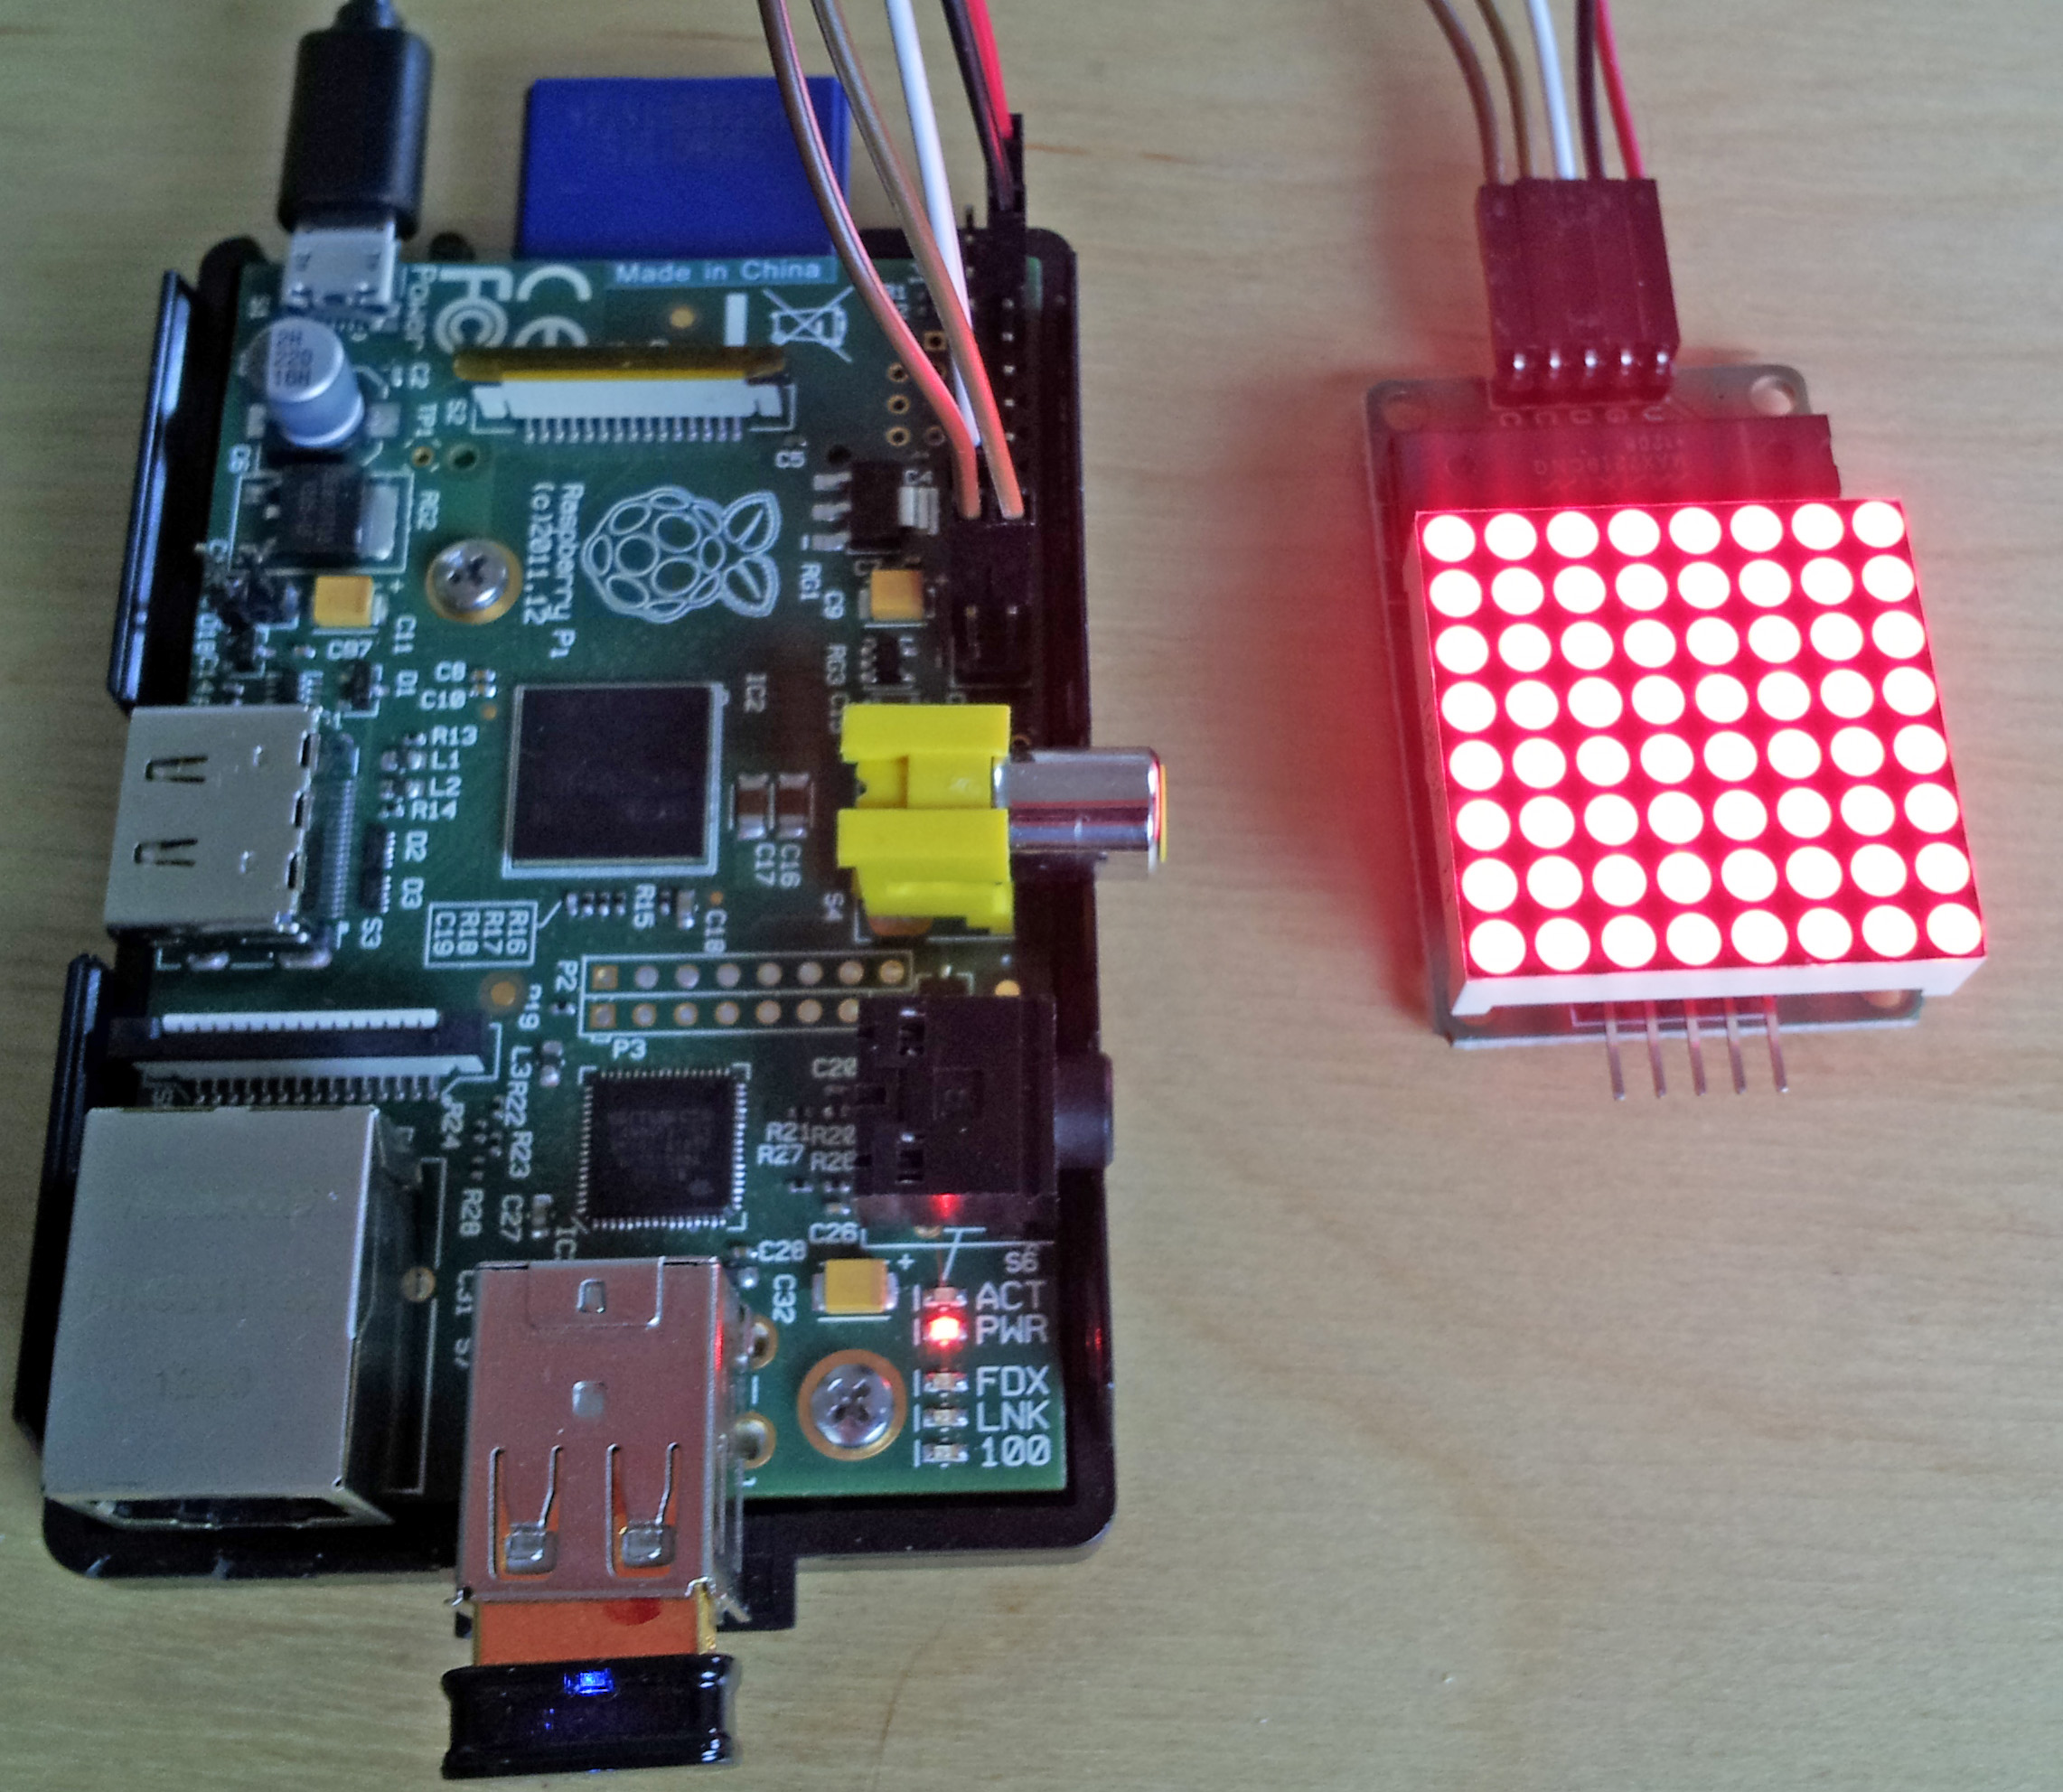 8 x 8 LED array driven by max7219 on the Raspberry Pi via python